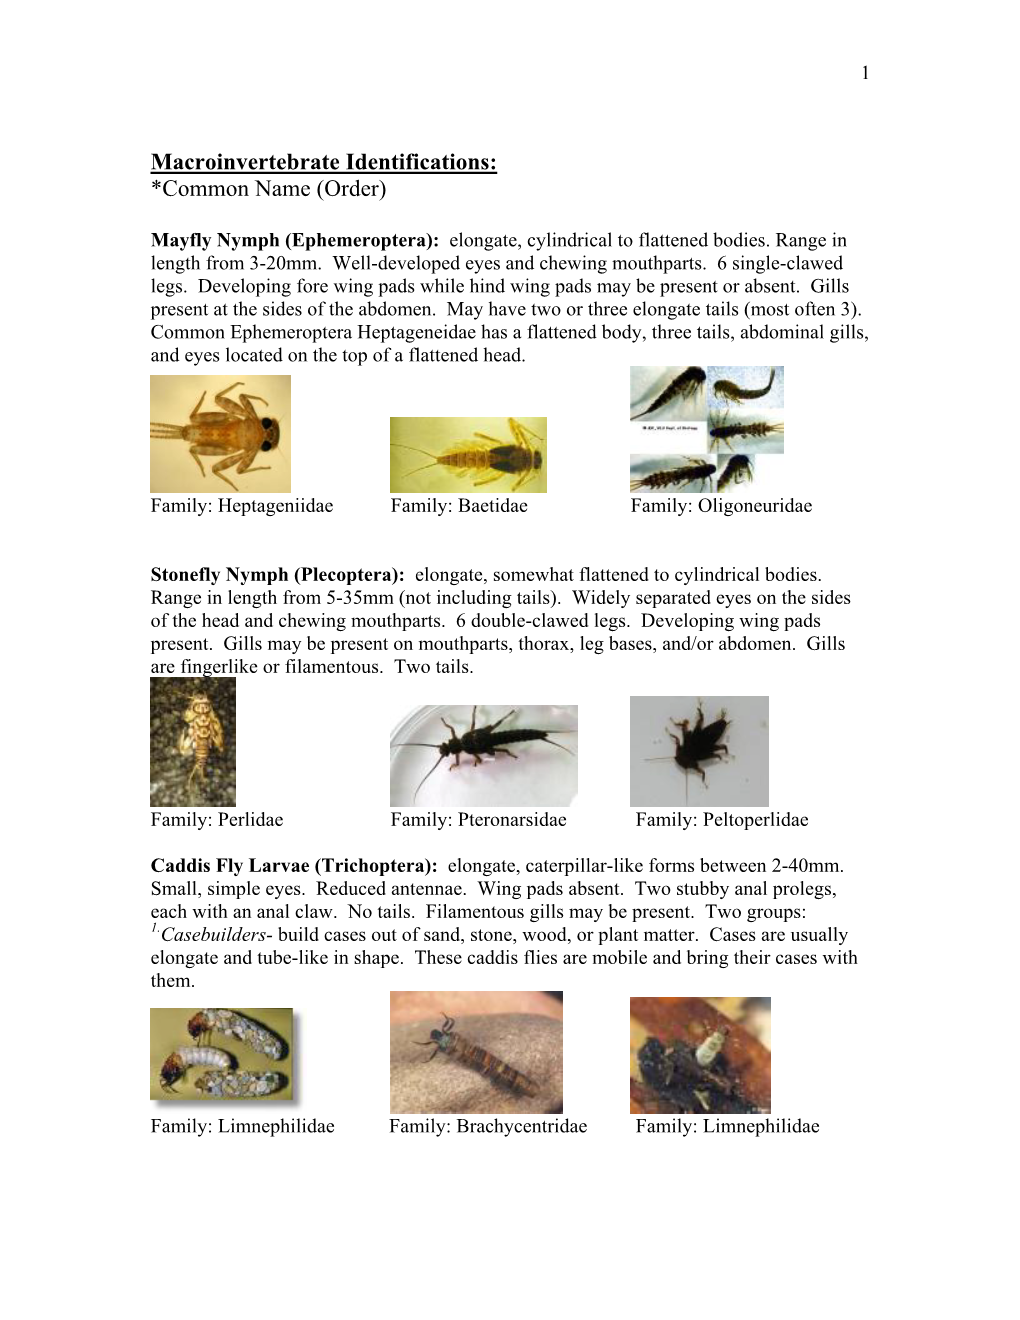 Macroinvertebrate Identifications: *Common Name (Order)